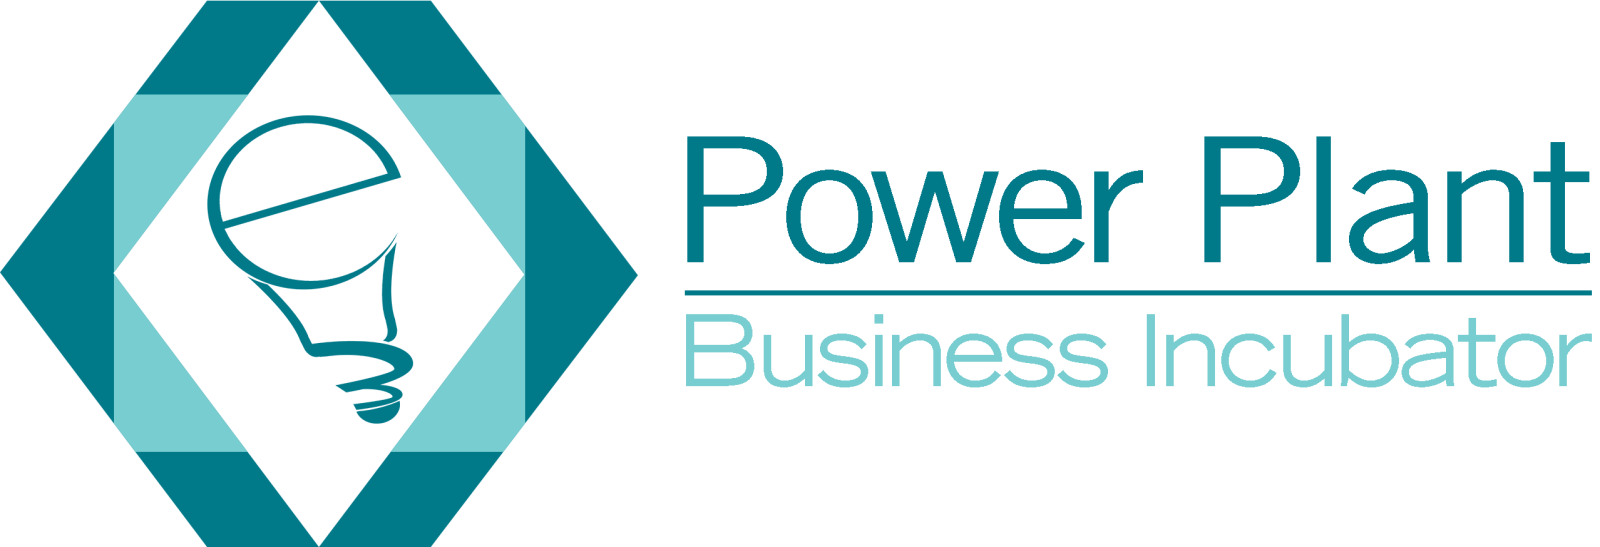 Power plant business incubator logo